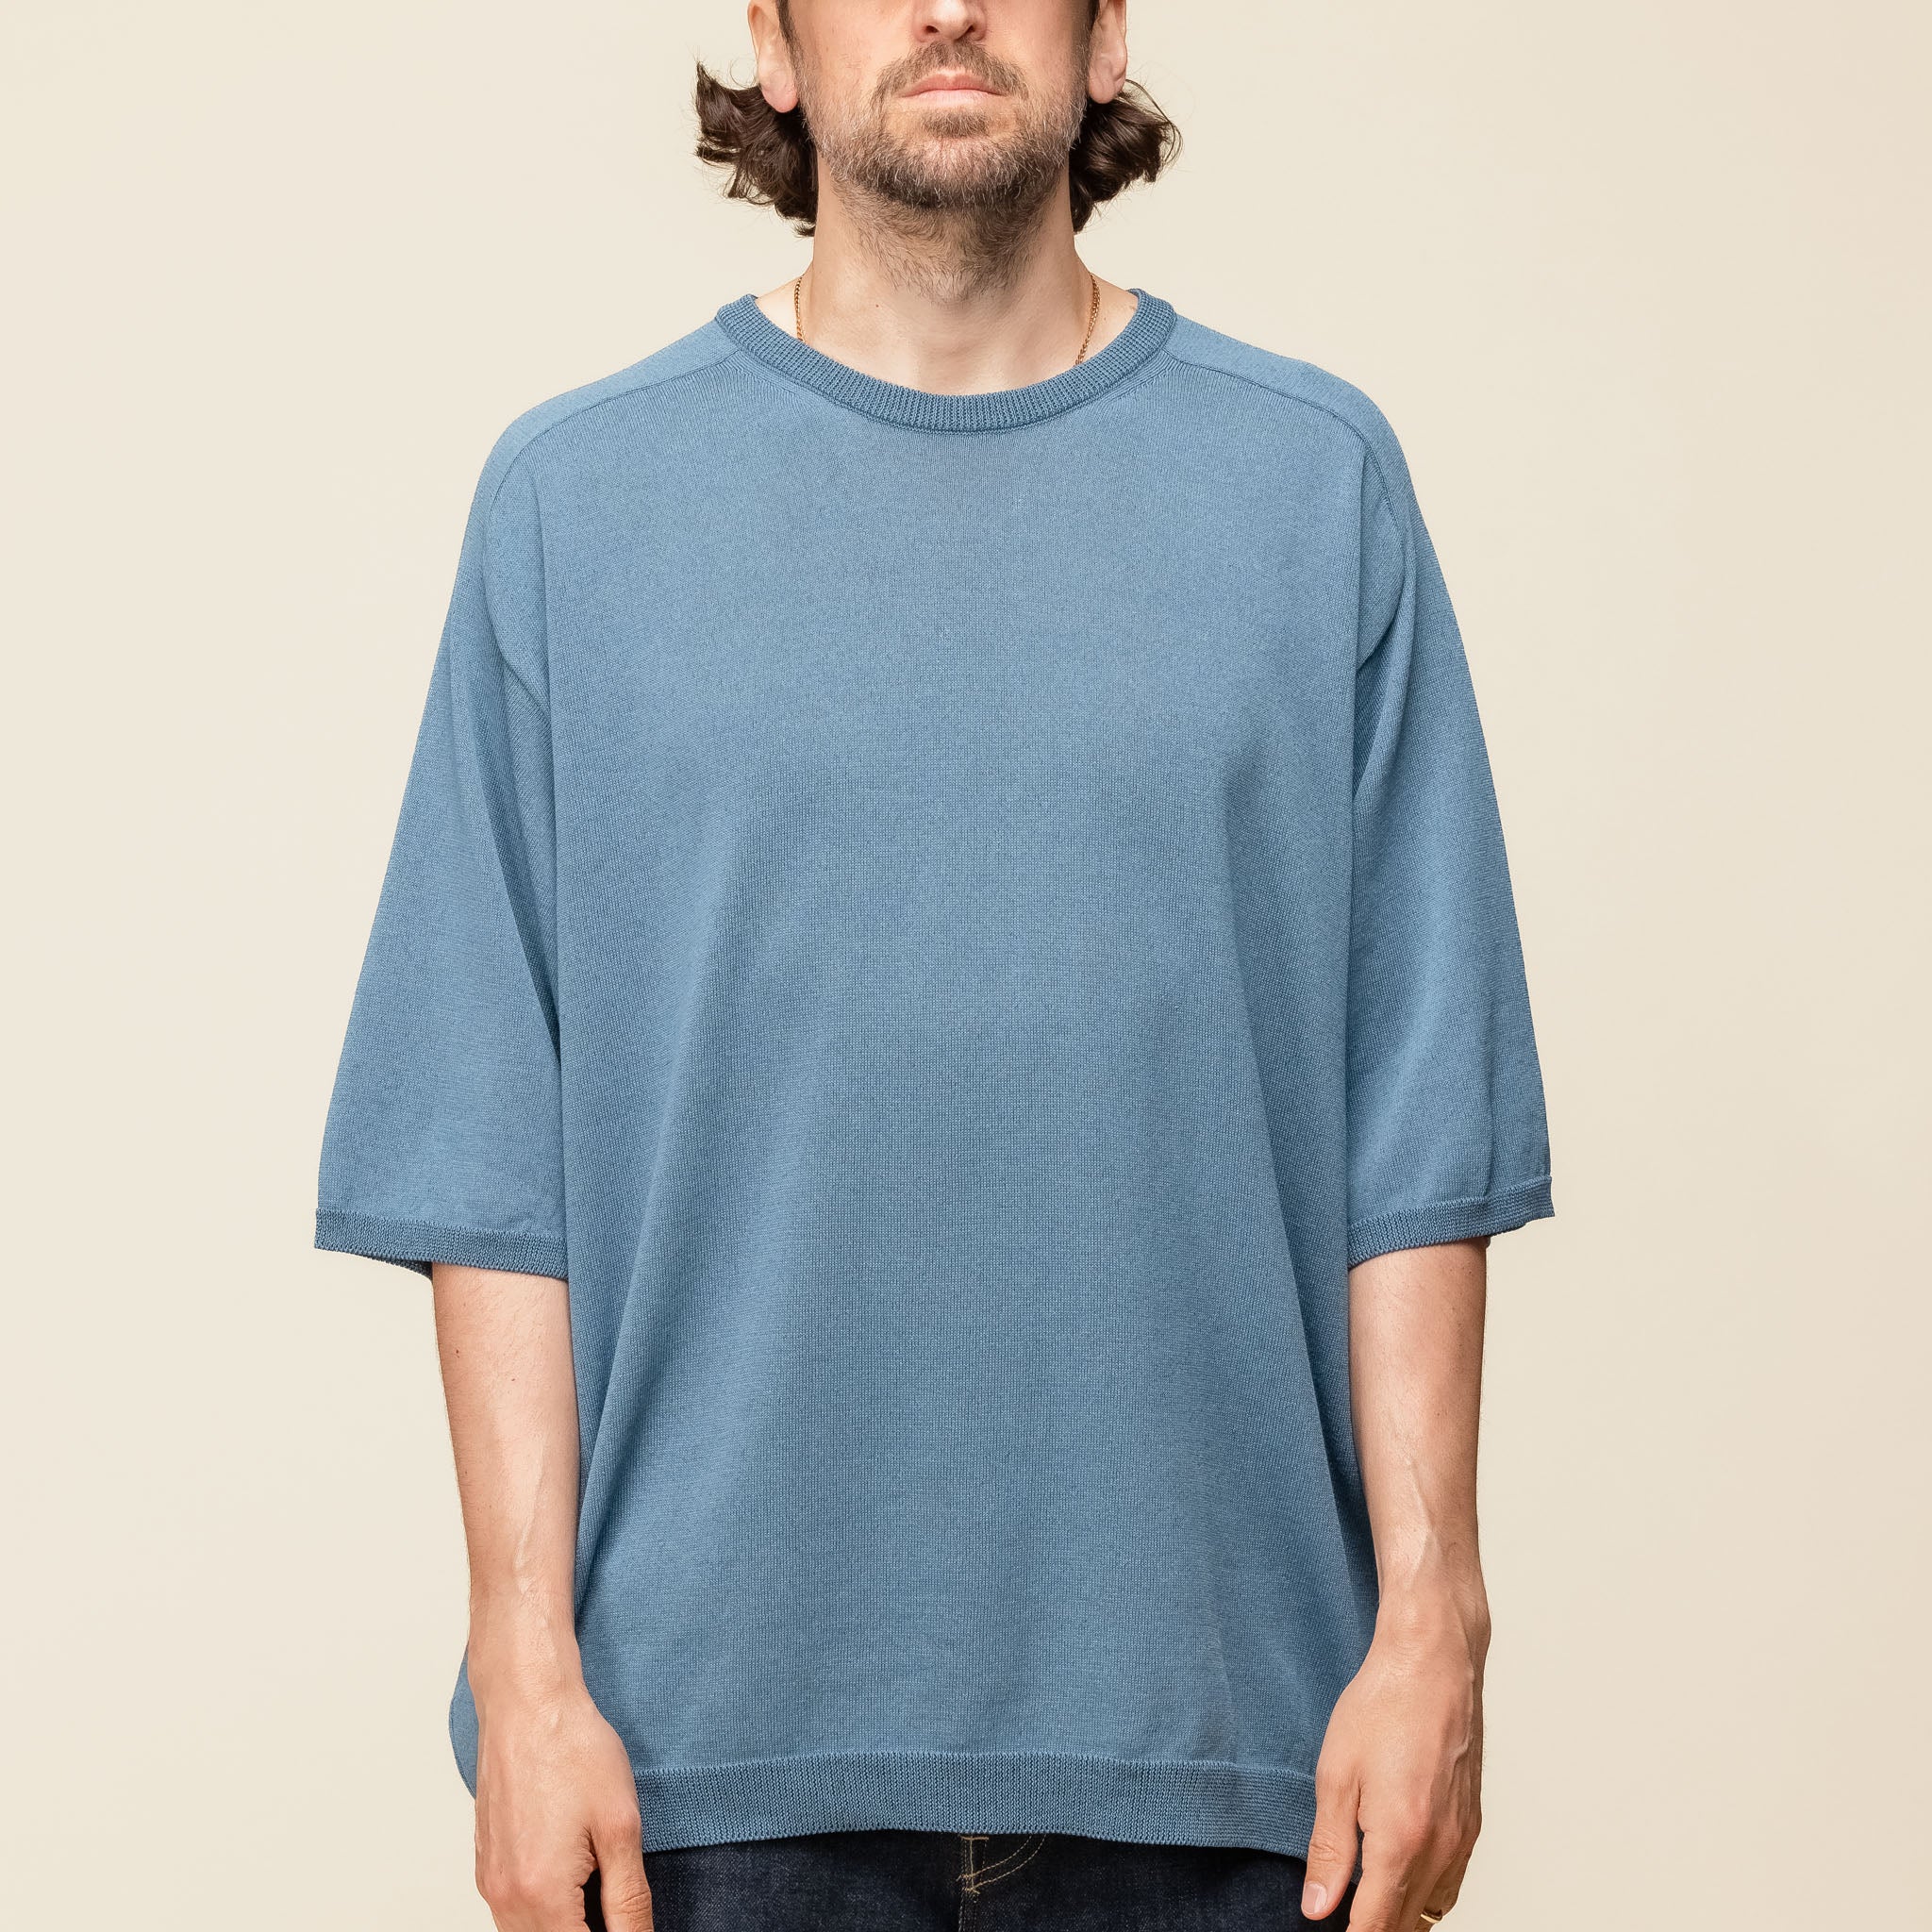 KN02241OS Still by Hand - Melange Knit T-Shirt - Dusty Blue